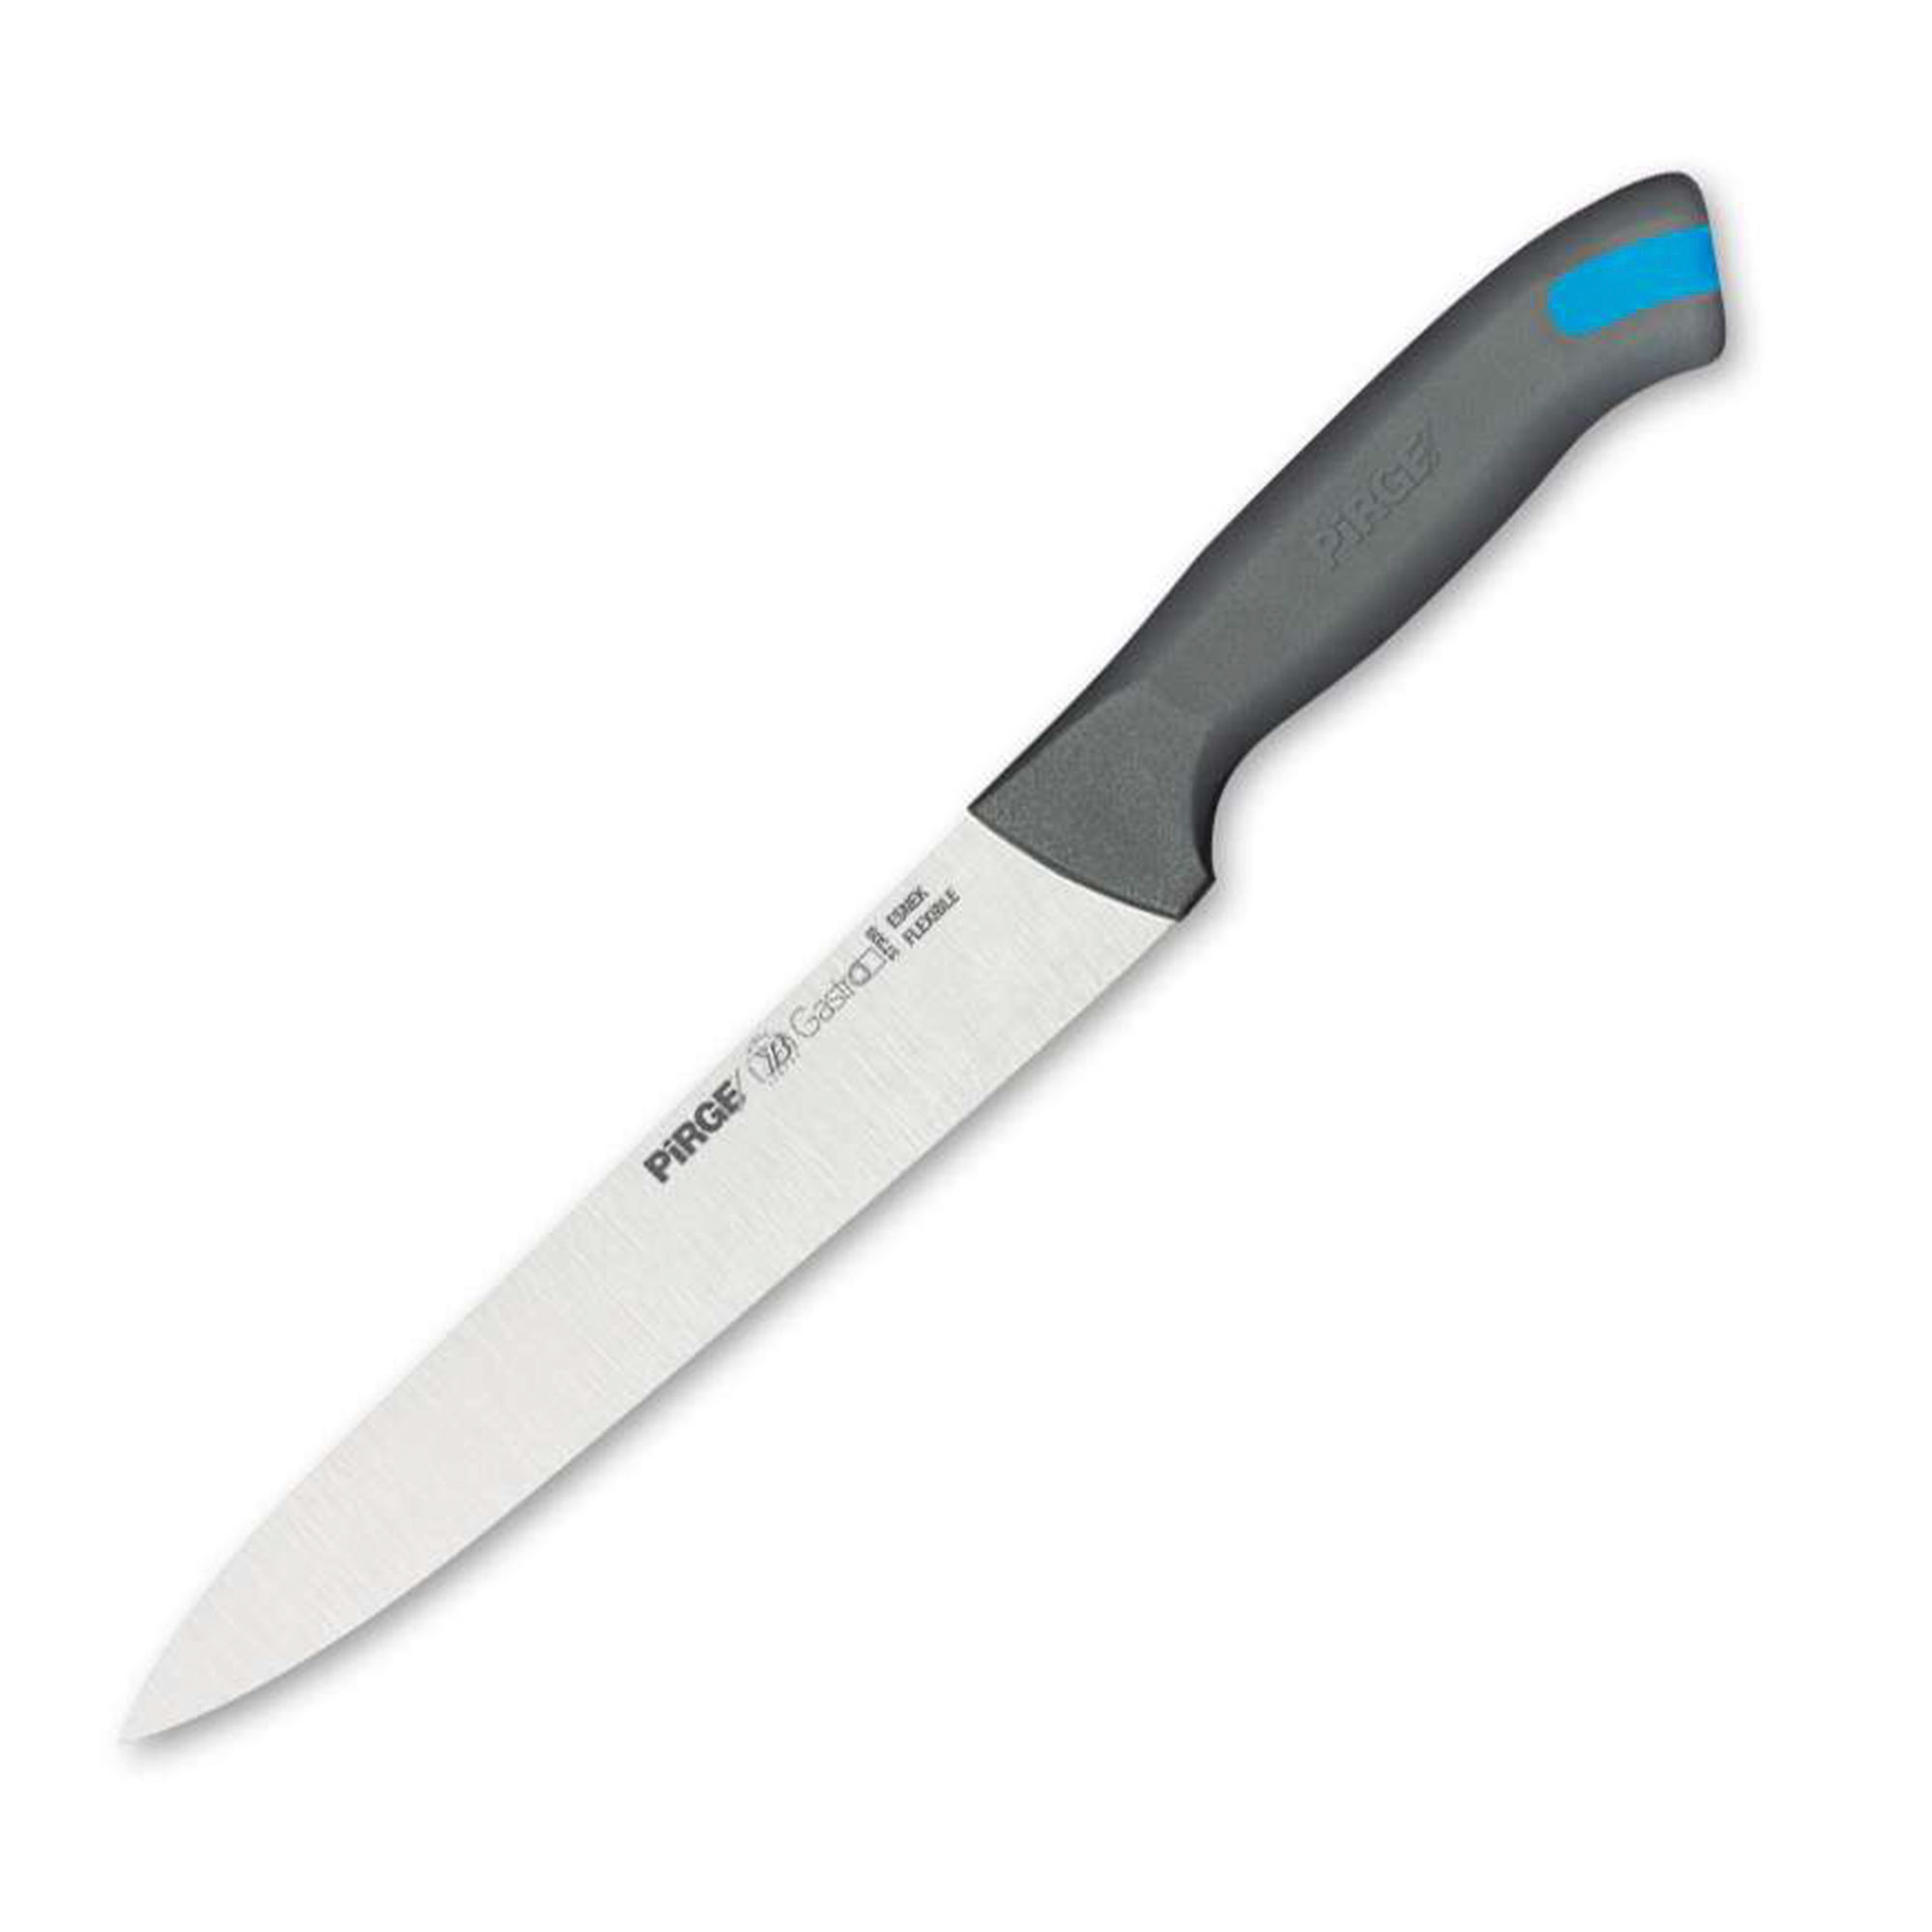 Филейный нож Pirge Gastro 16 см